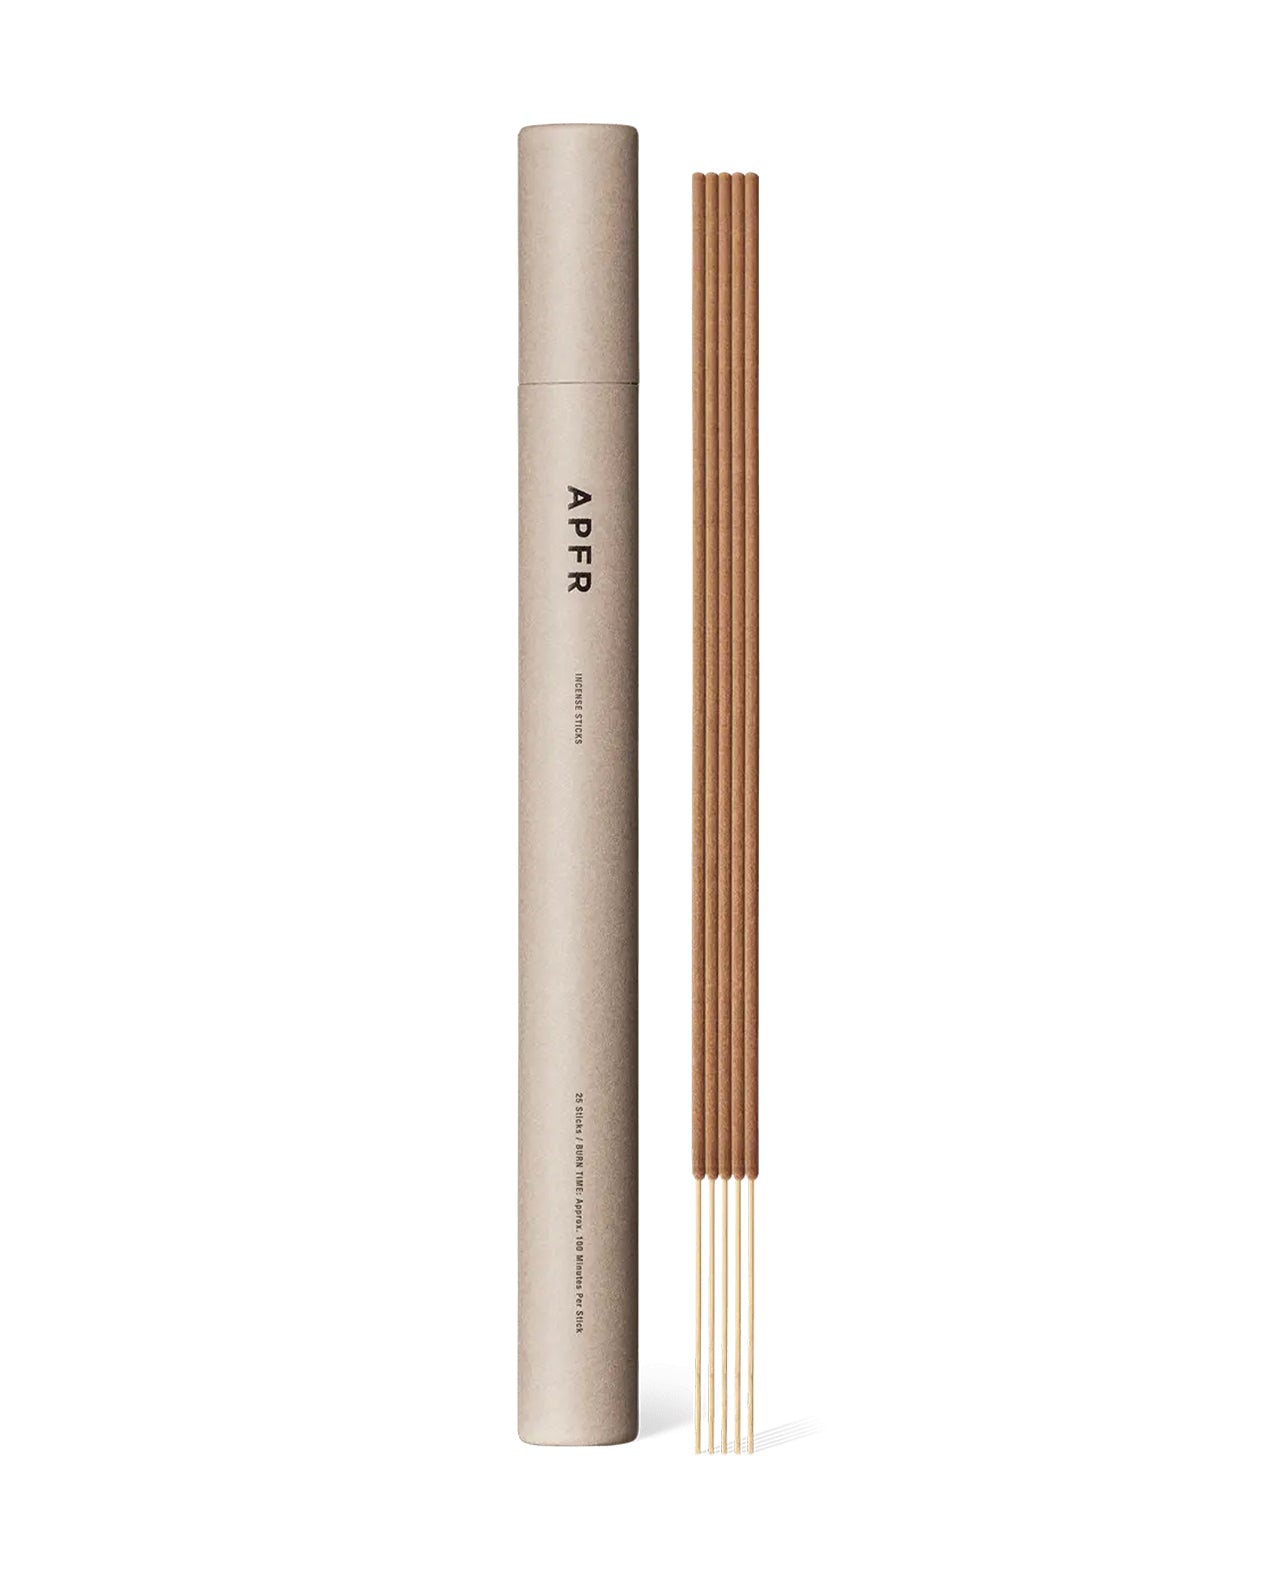 APFR Bamboo Incense Stick